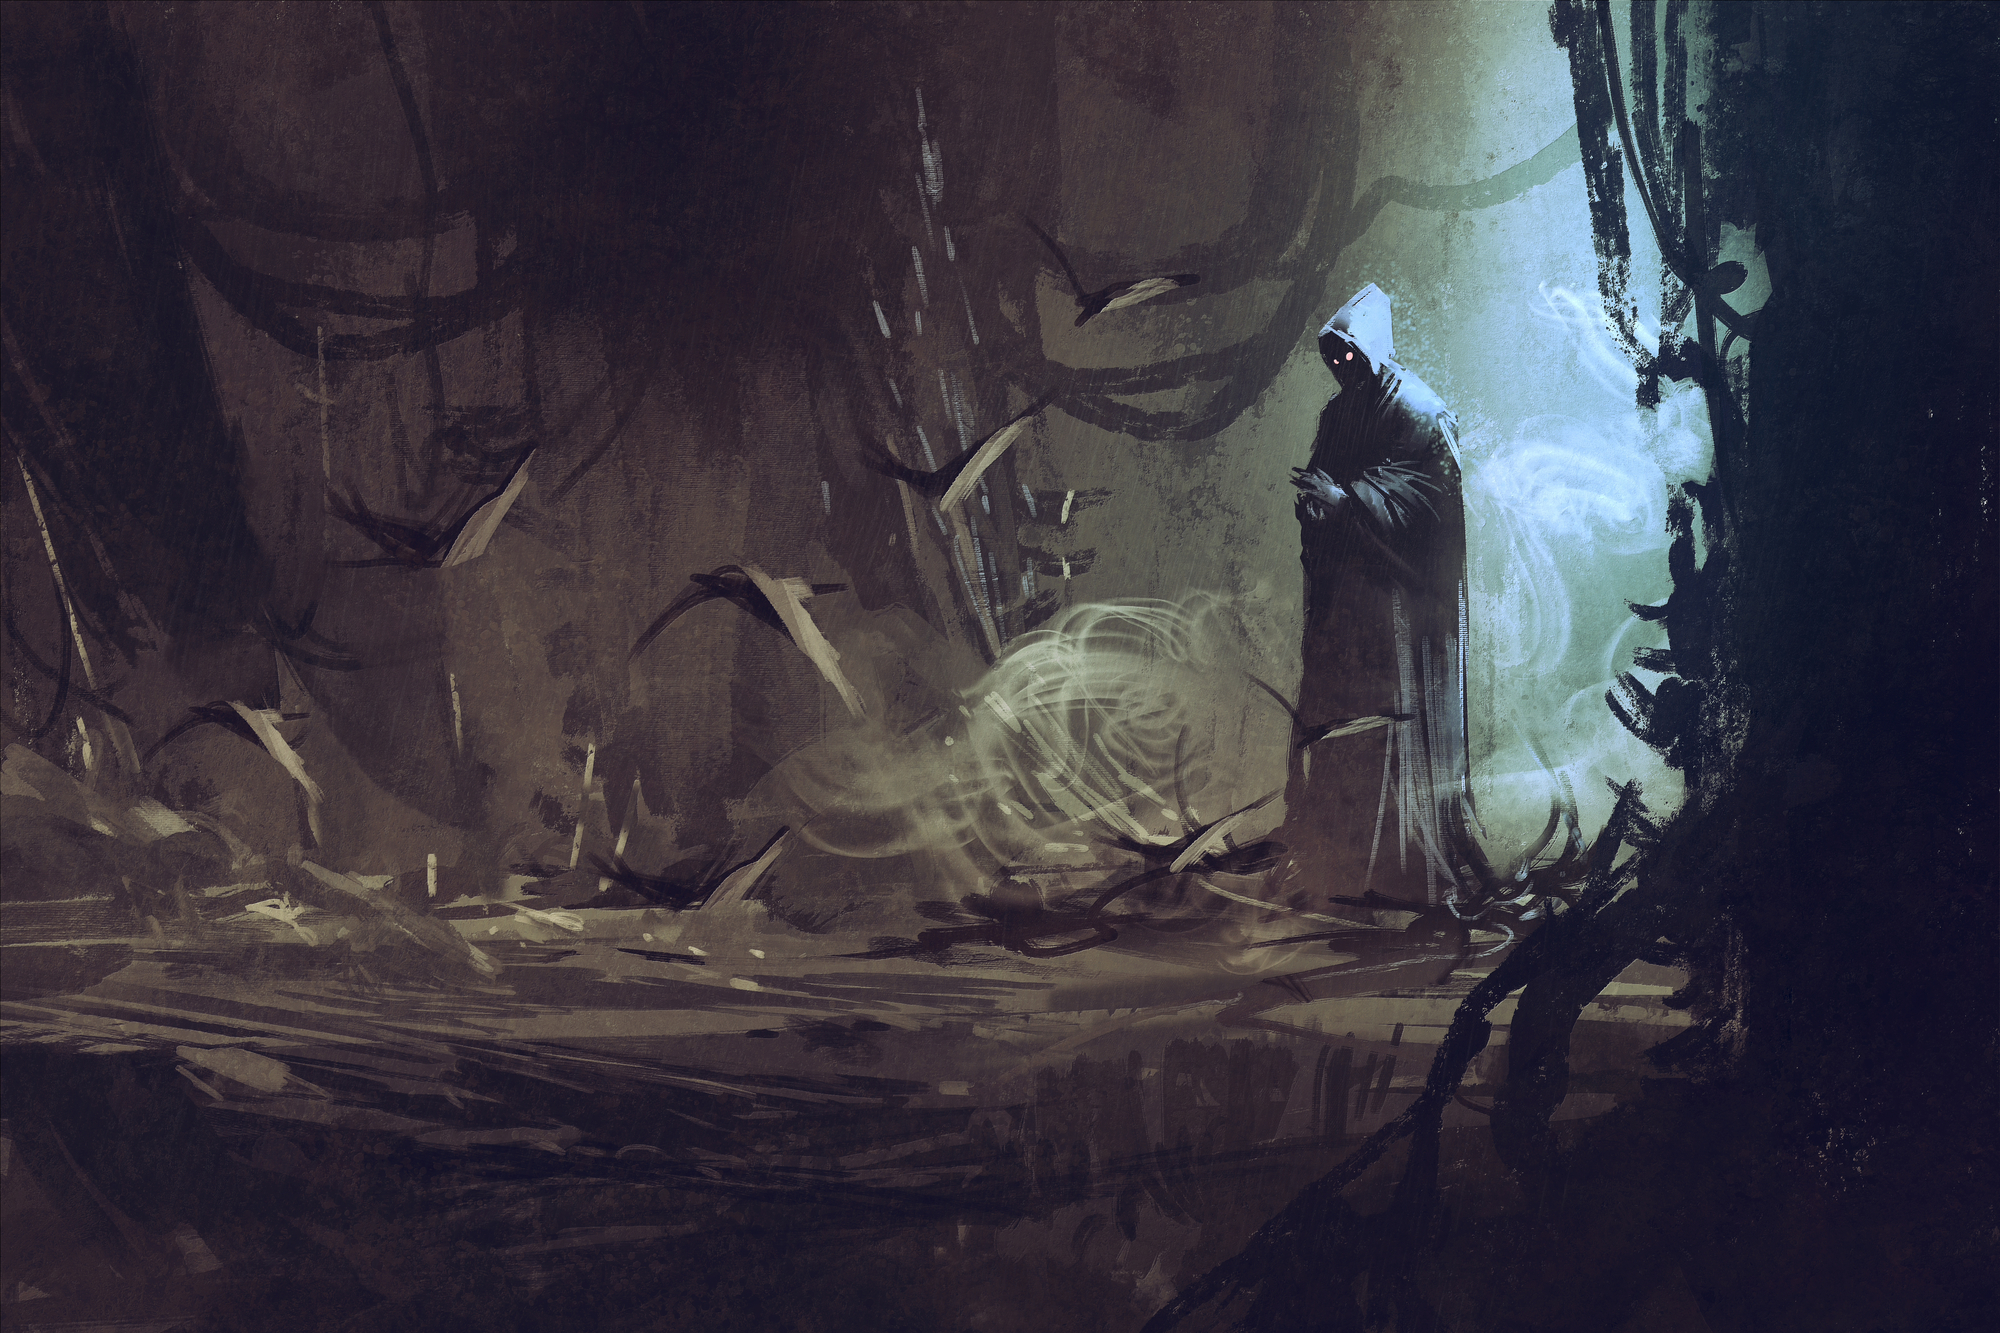 dark cloak in mysterious forest,wizard,sorcerer,illustration